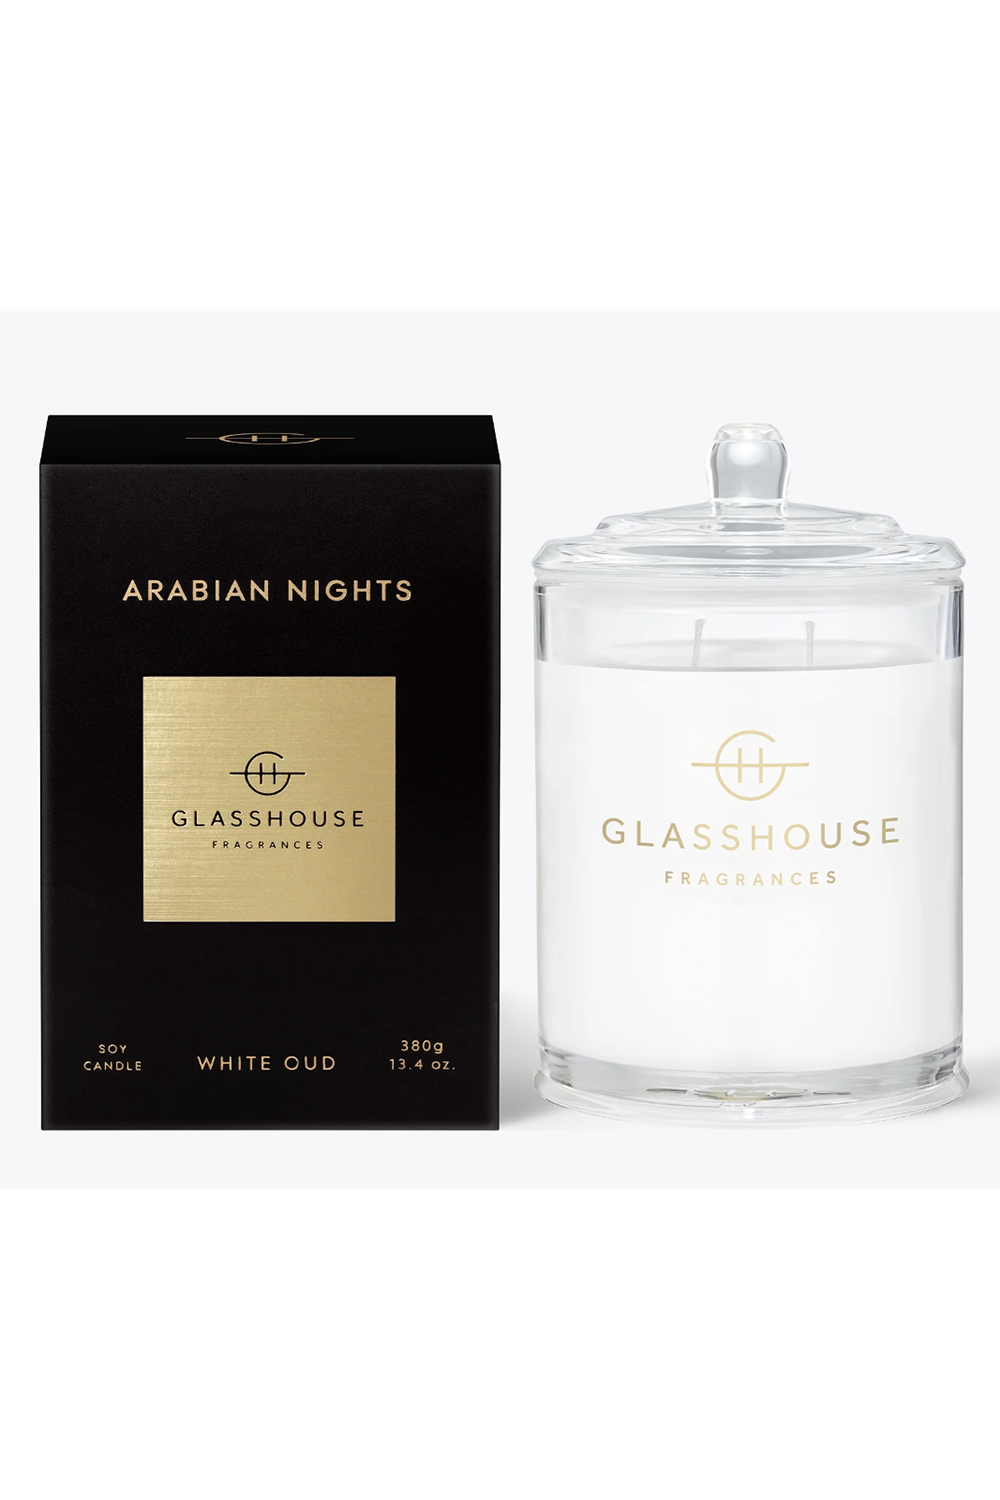 Glasshouse Fragrance Candle - Arabian Nights